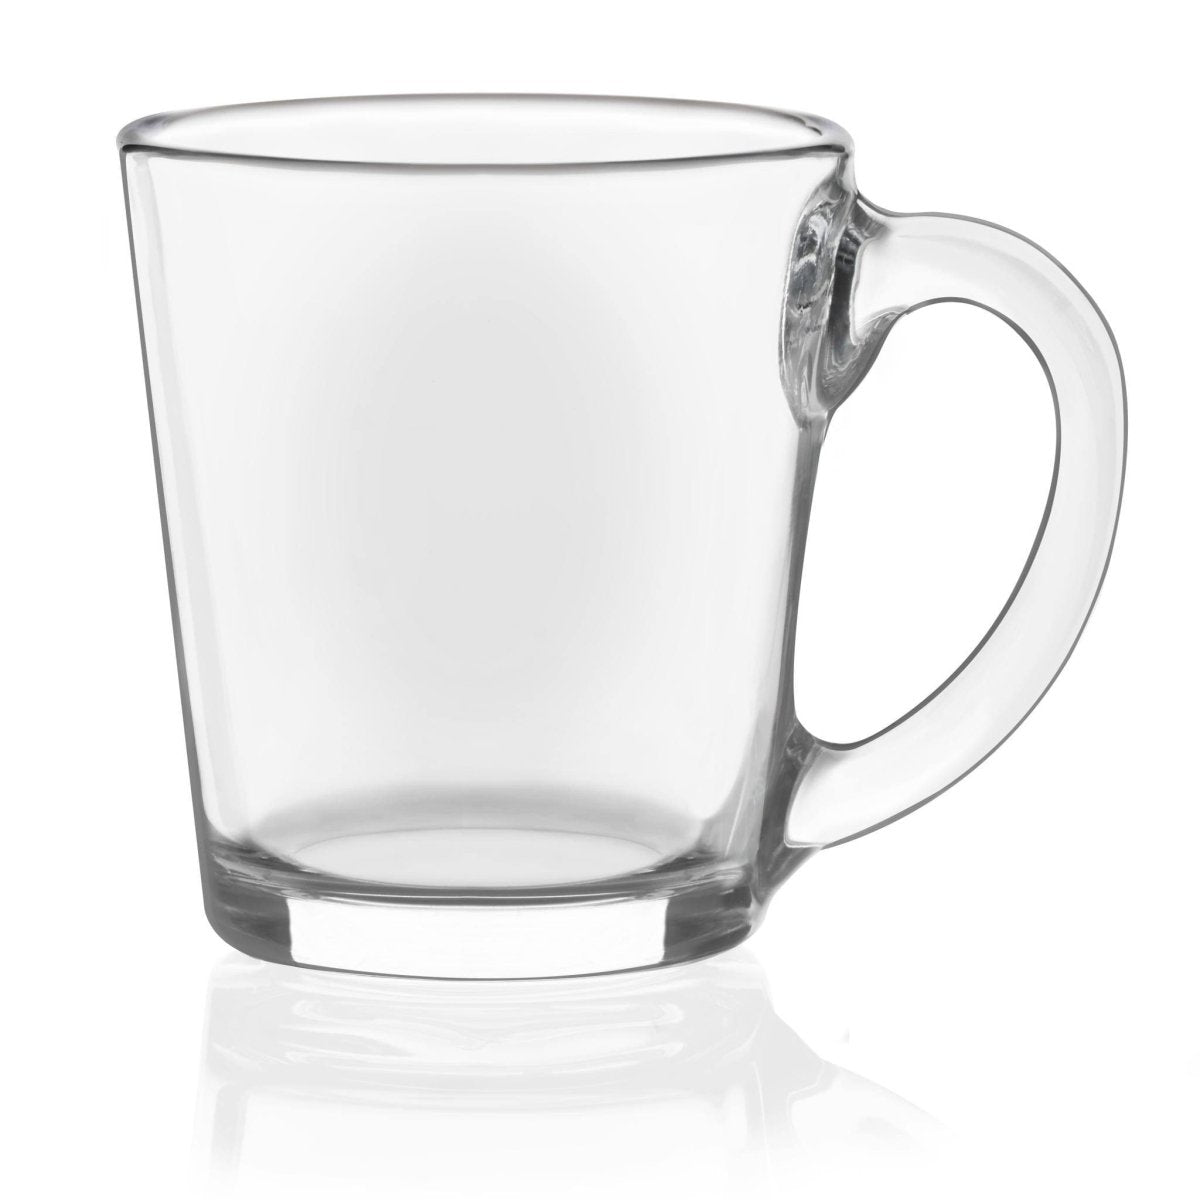 https://cdn.shopify.com/s/files/1/0275/1876/3088/products/all-purpose-glass-mug-set-135-oz-set-of-12-984928_1445x.jpg?v=1701566459